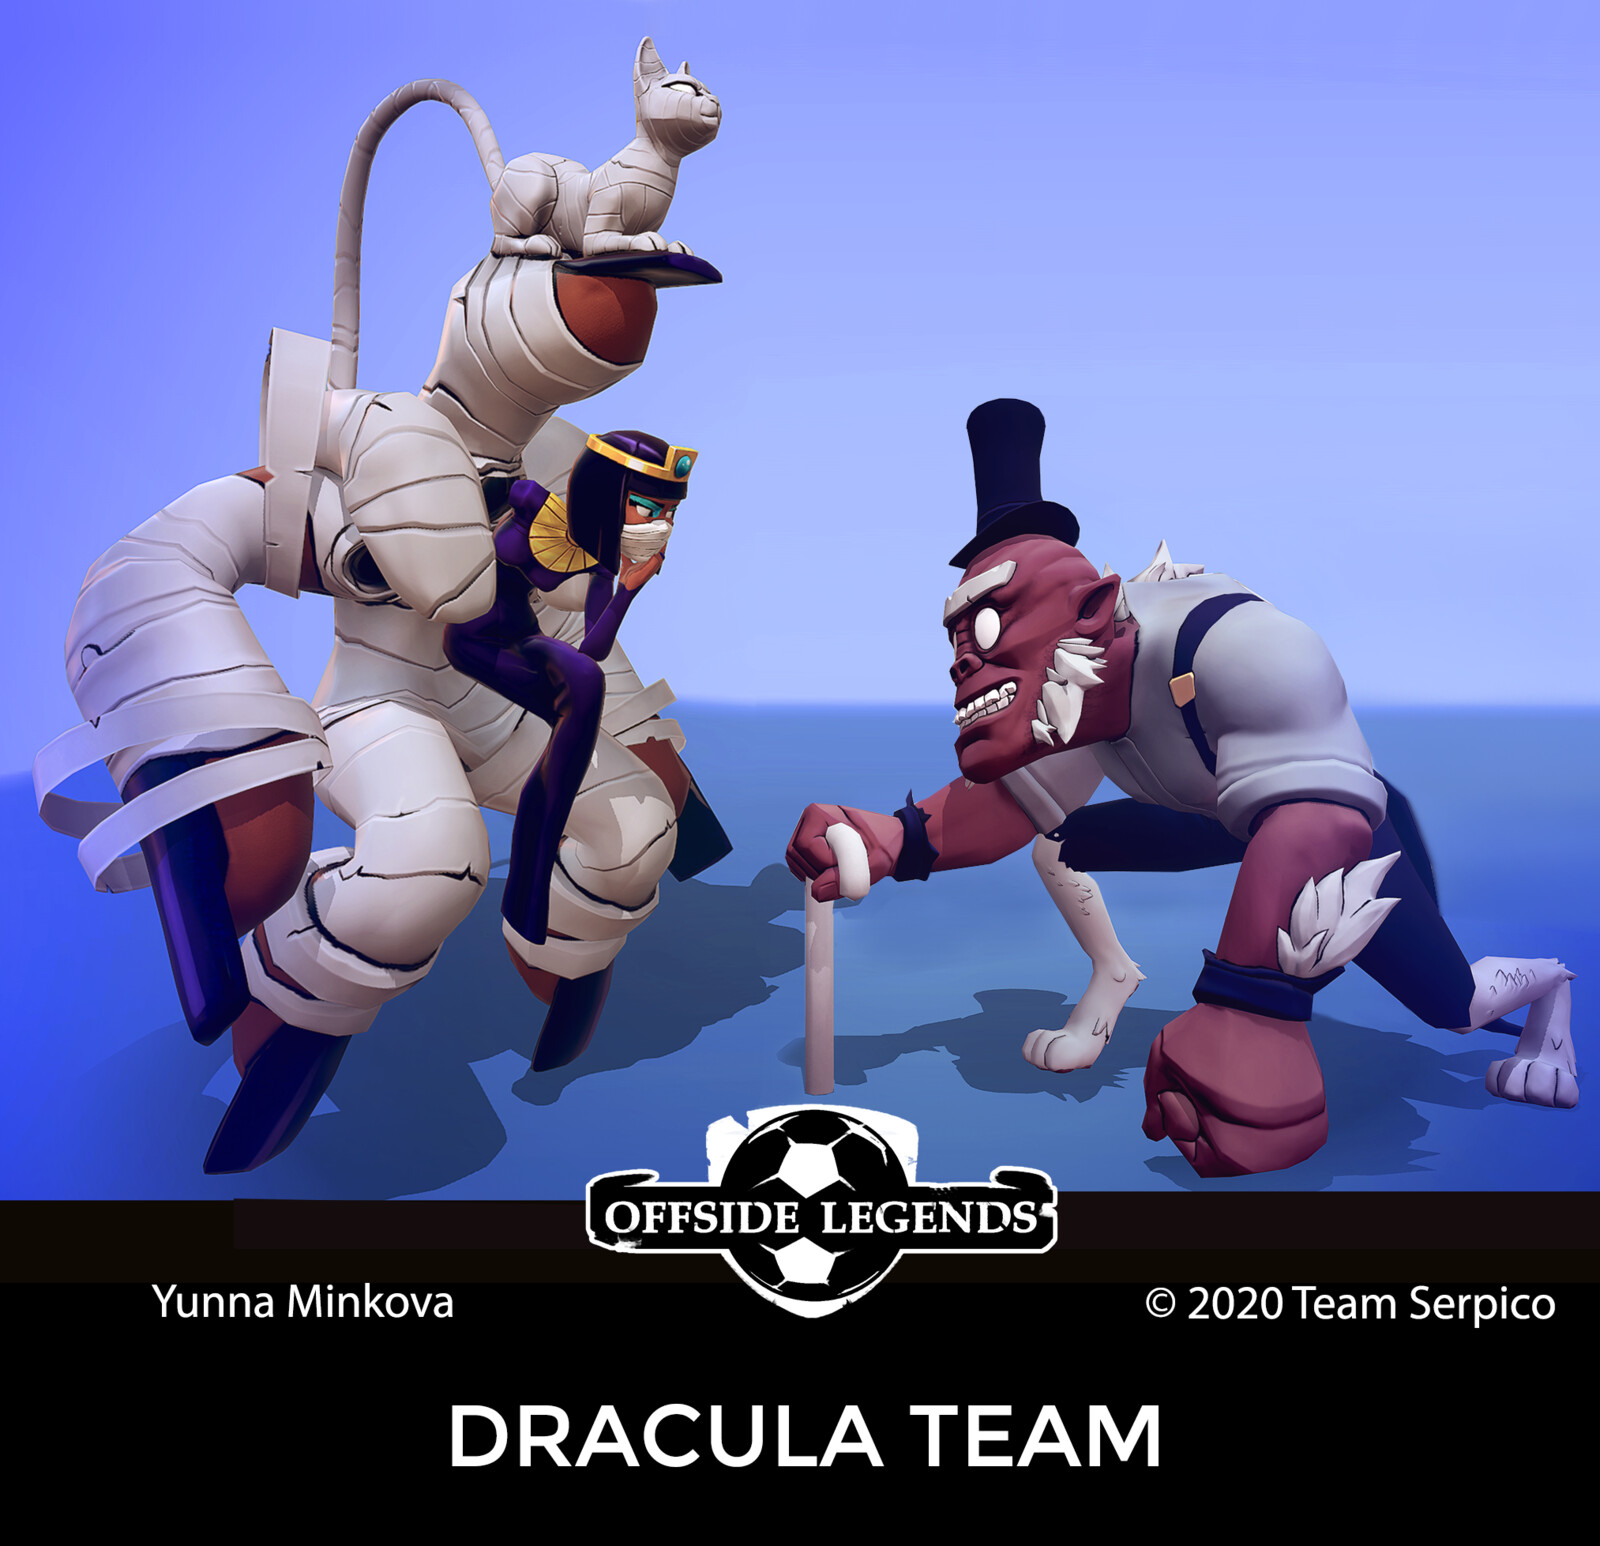 Monster's team "Offside Legends" © 2020 Team Serpico 